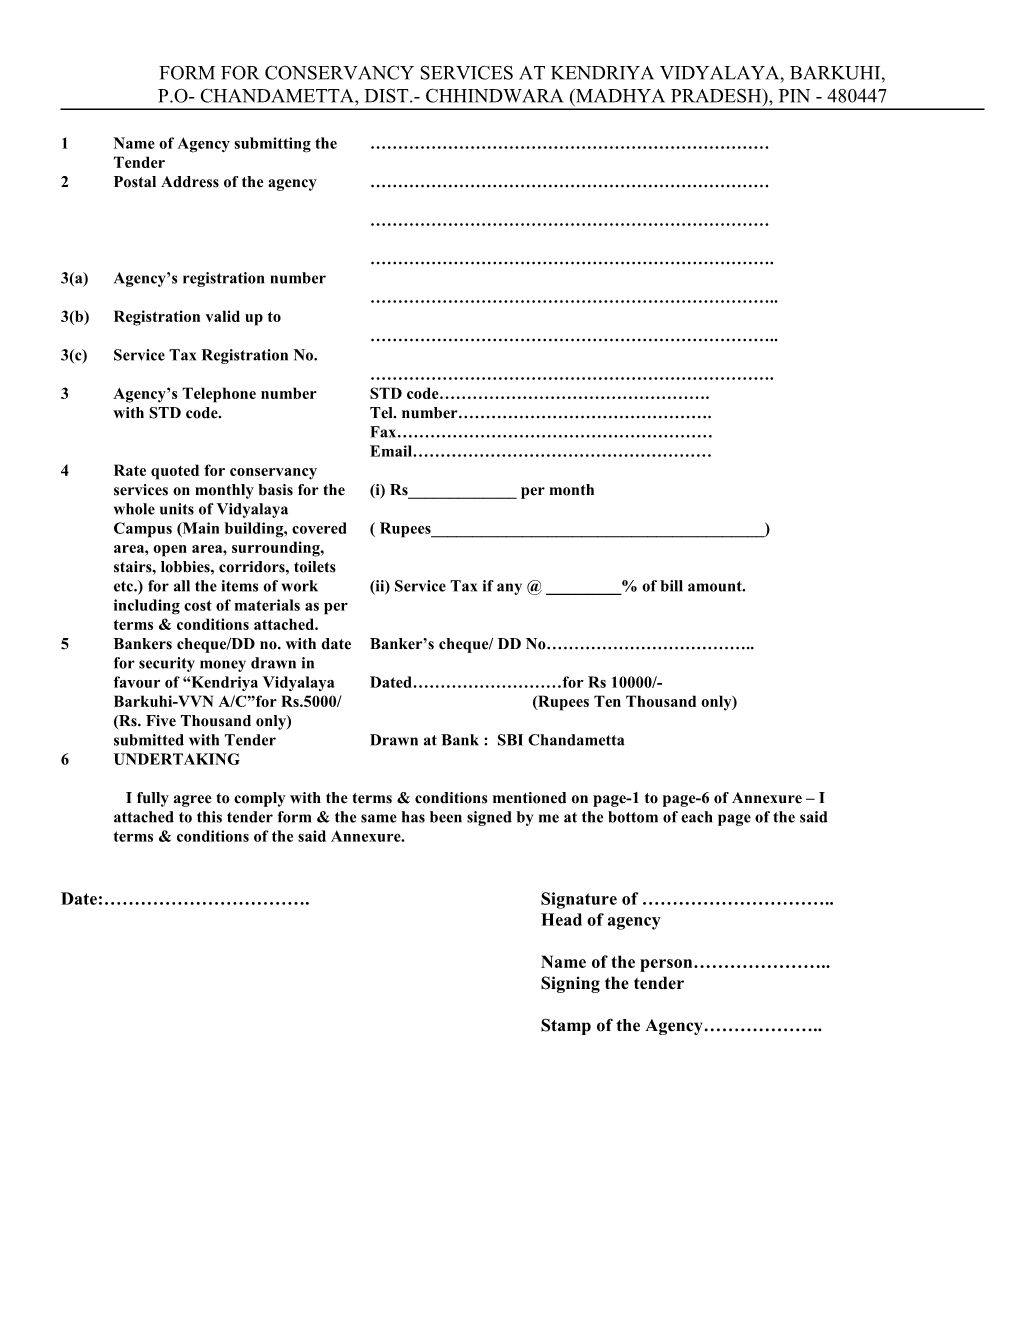 Form for Conservancy Services at Kendriya Vidyalaya, Barkuhi